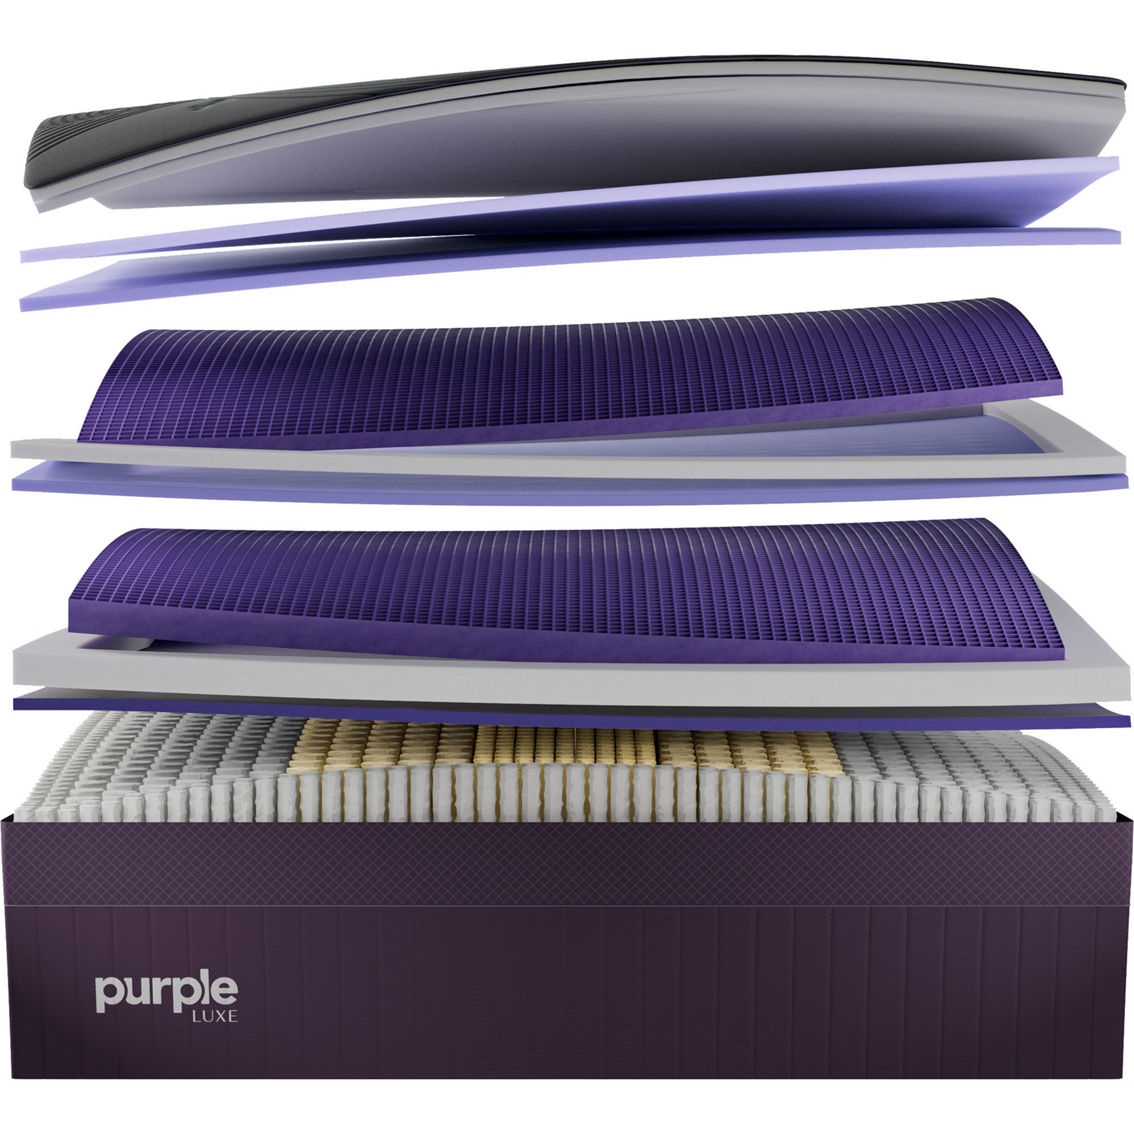 Purple Rejuvenate Premier Mattress - Image 6 of 6